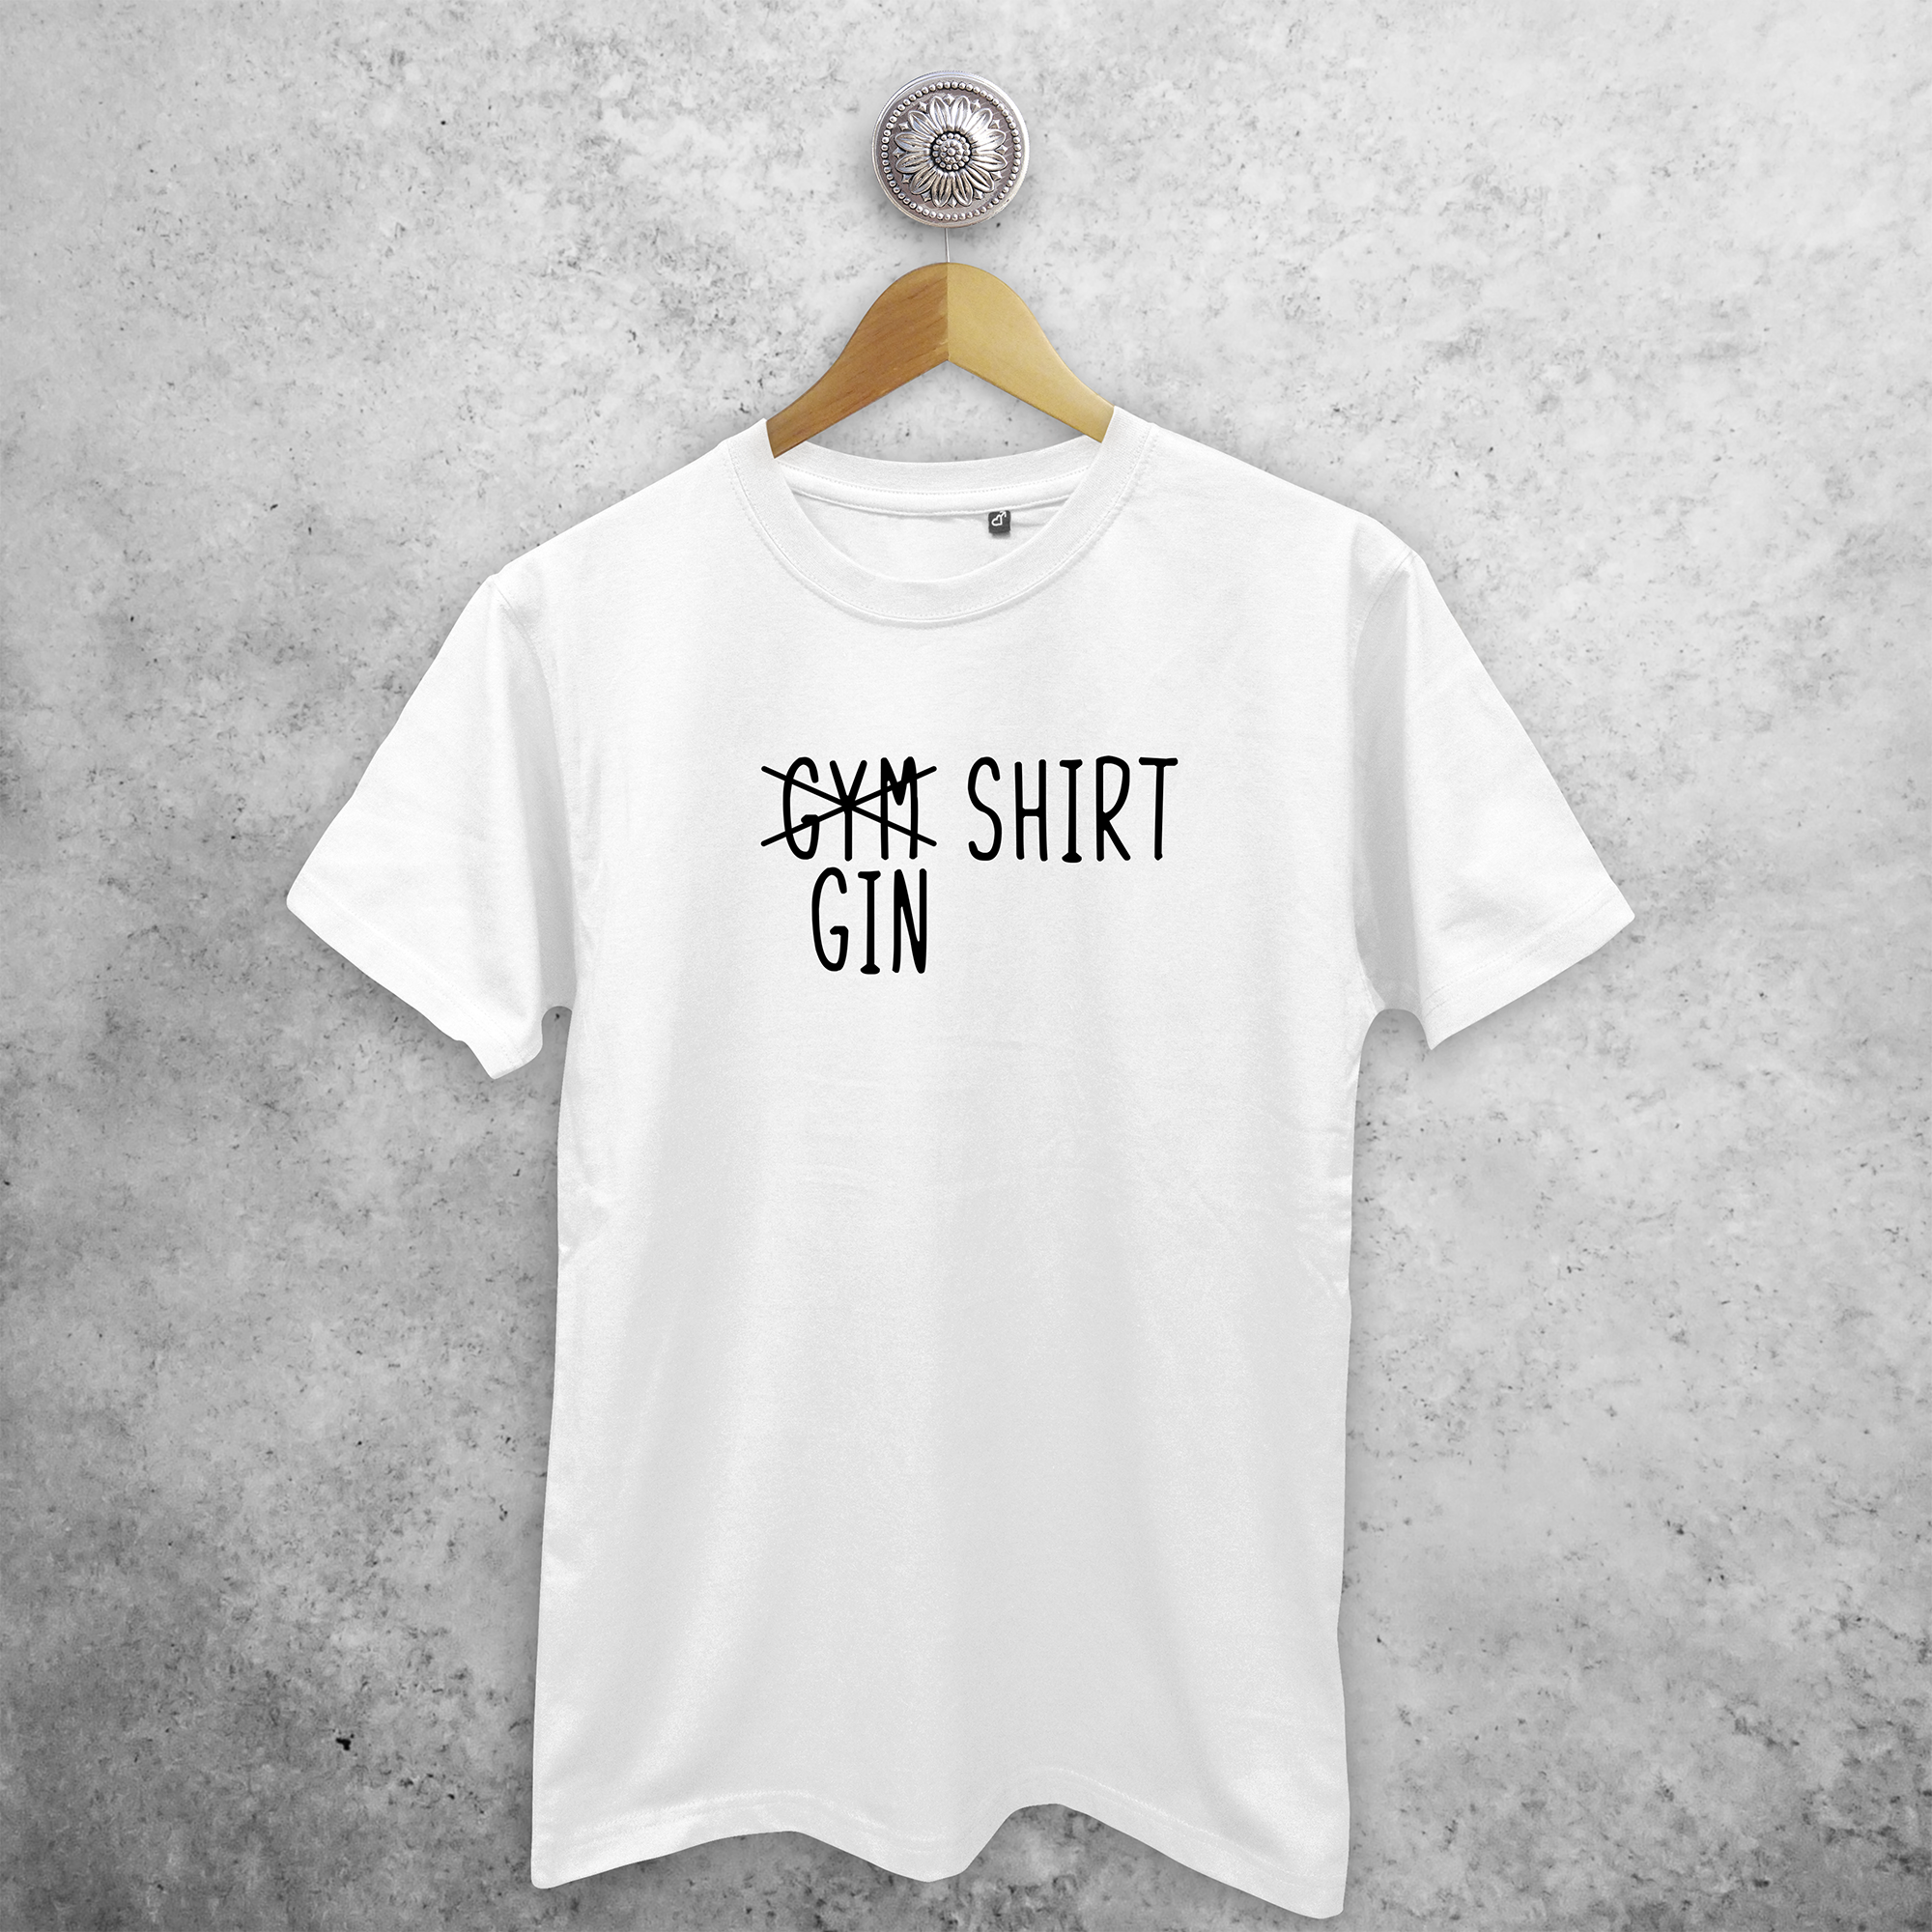 'Gym/Gin shirt' adult shirt